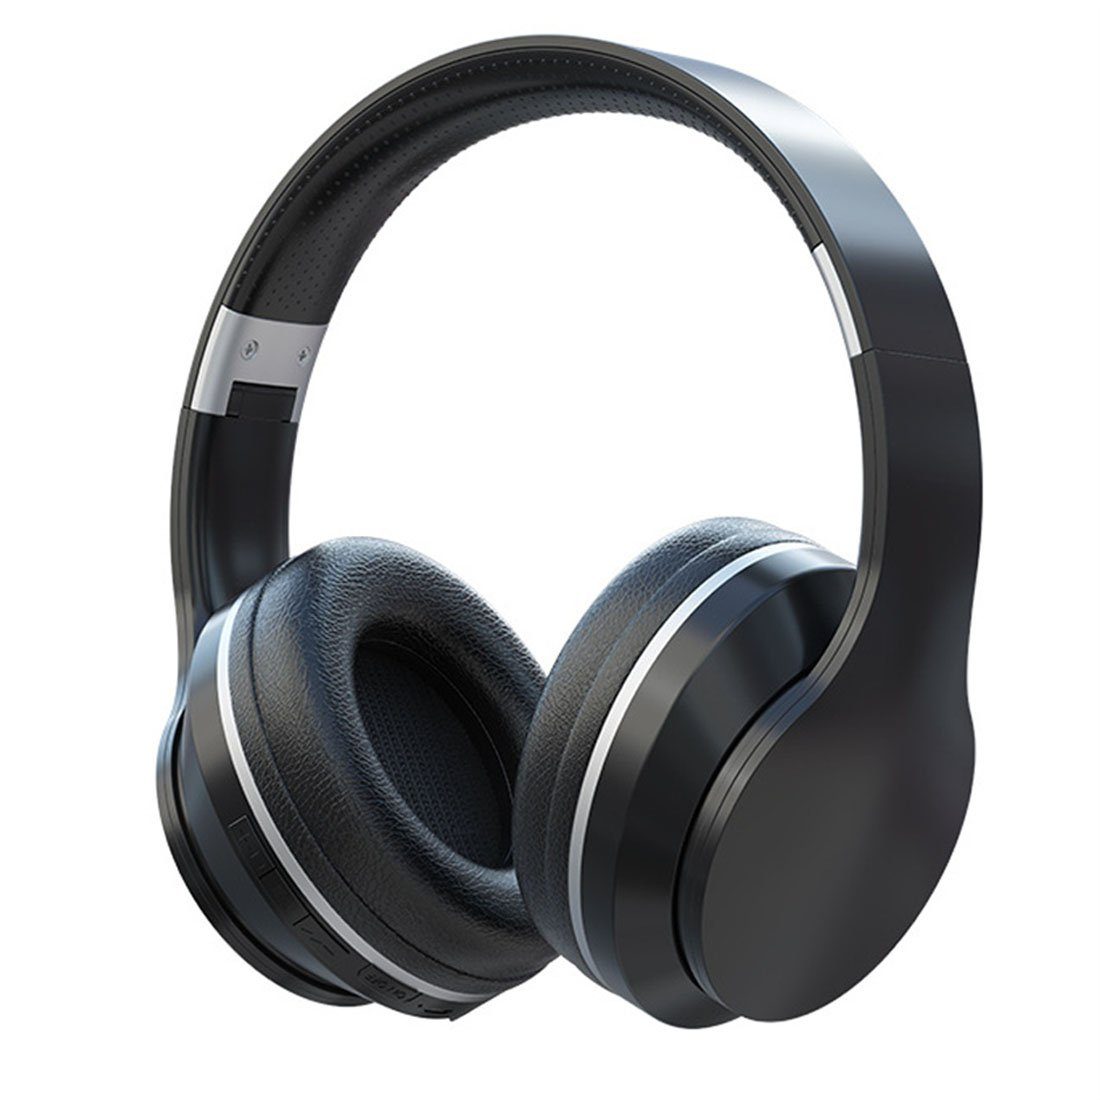 DÖRÖY Drahtloses Bluetooth-Headset mit Farbverlauf, Gaming-Headset, Headset Bluetooth-Kopfhörer Schwarz